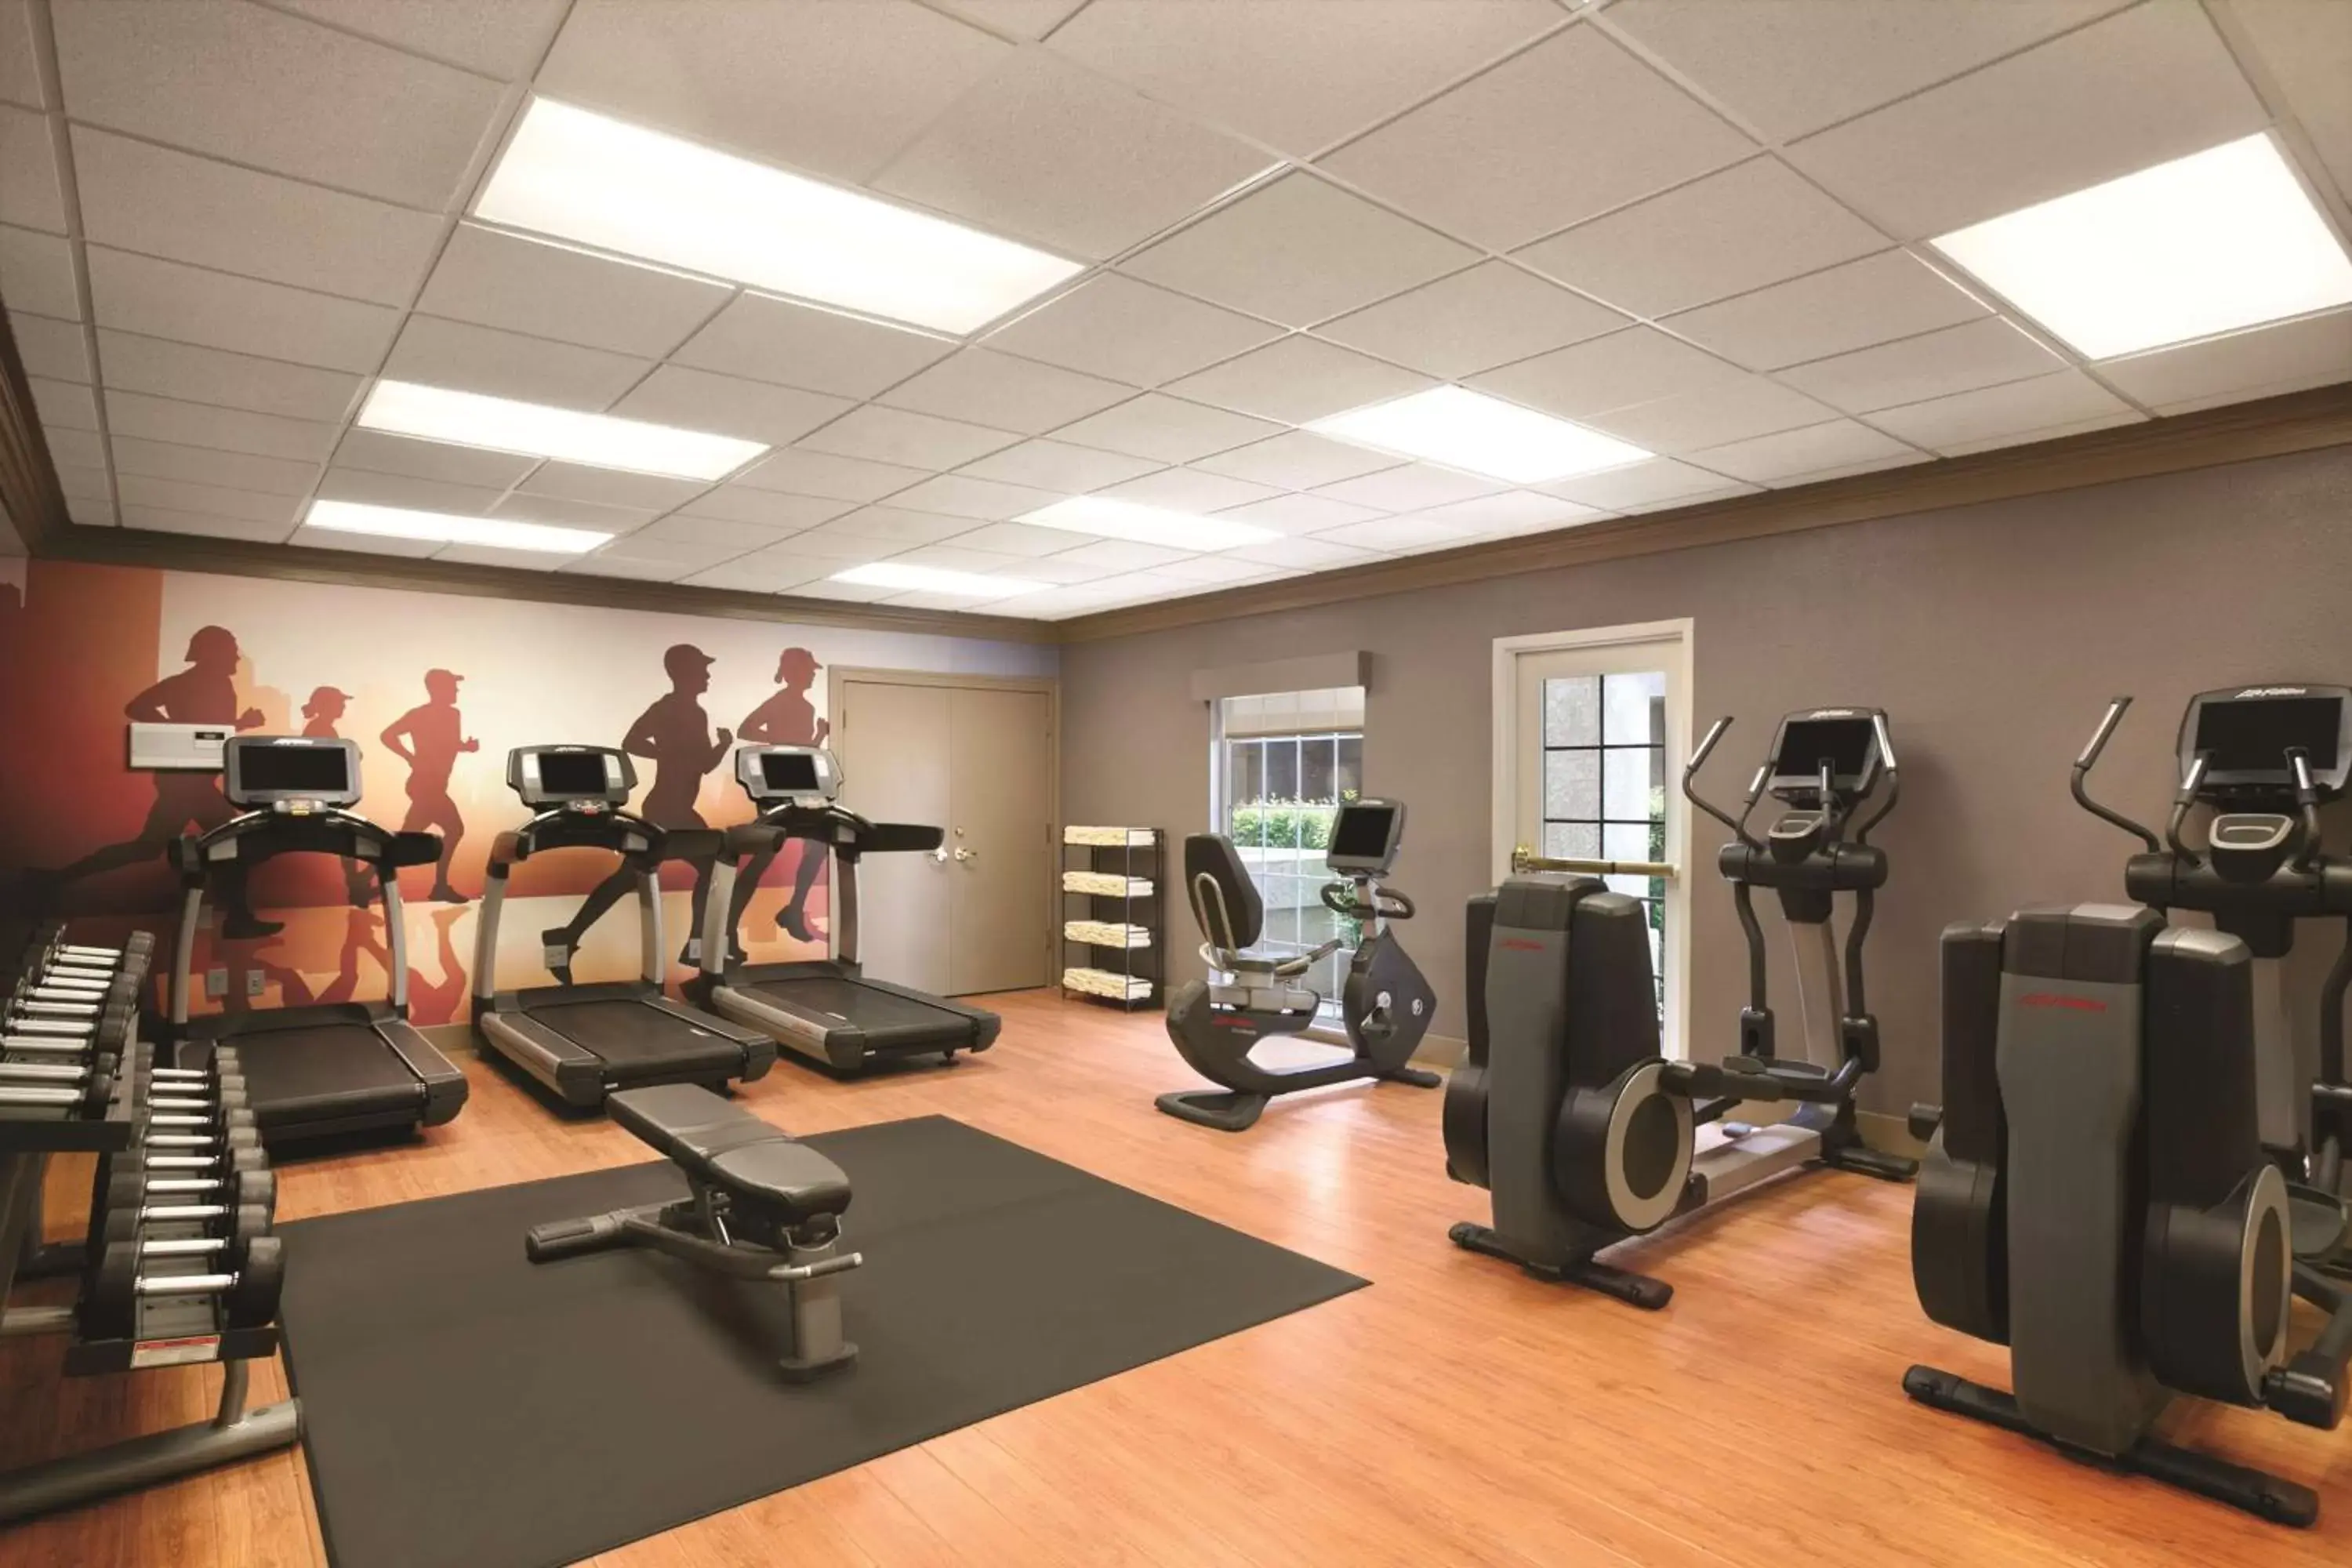 Fitness centre/facilities, Fitness Center/Facilities in Hyatt House Pleasanton